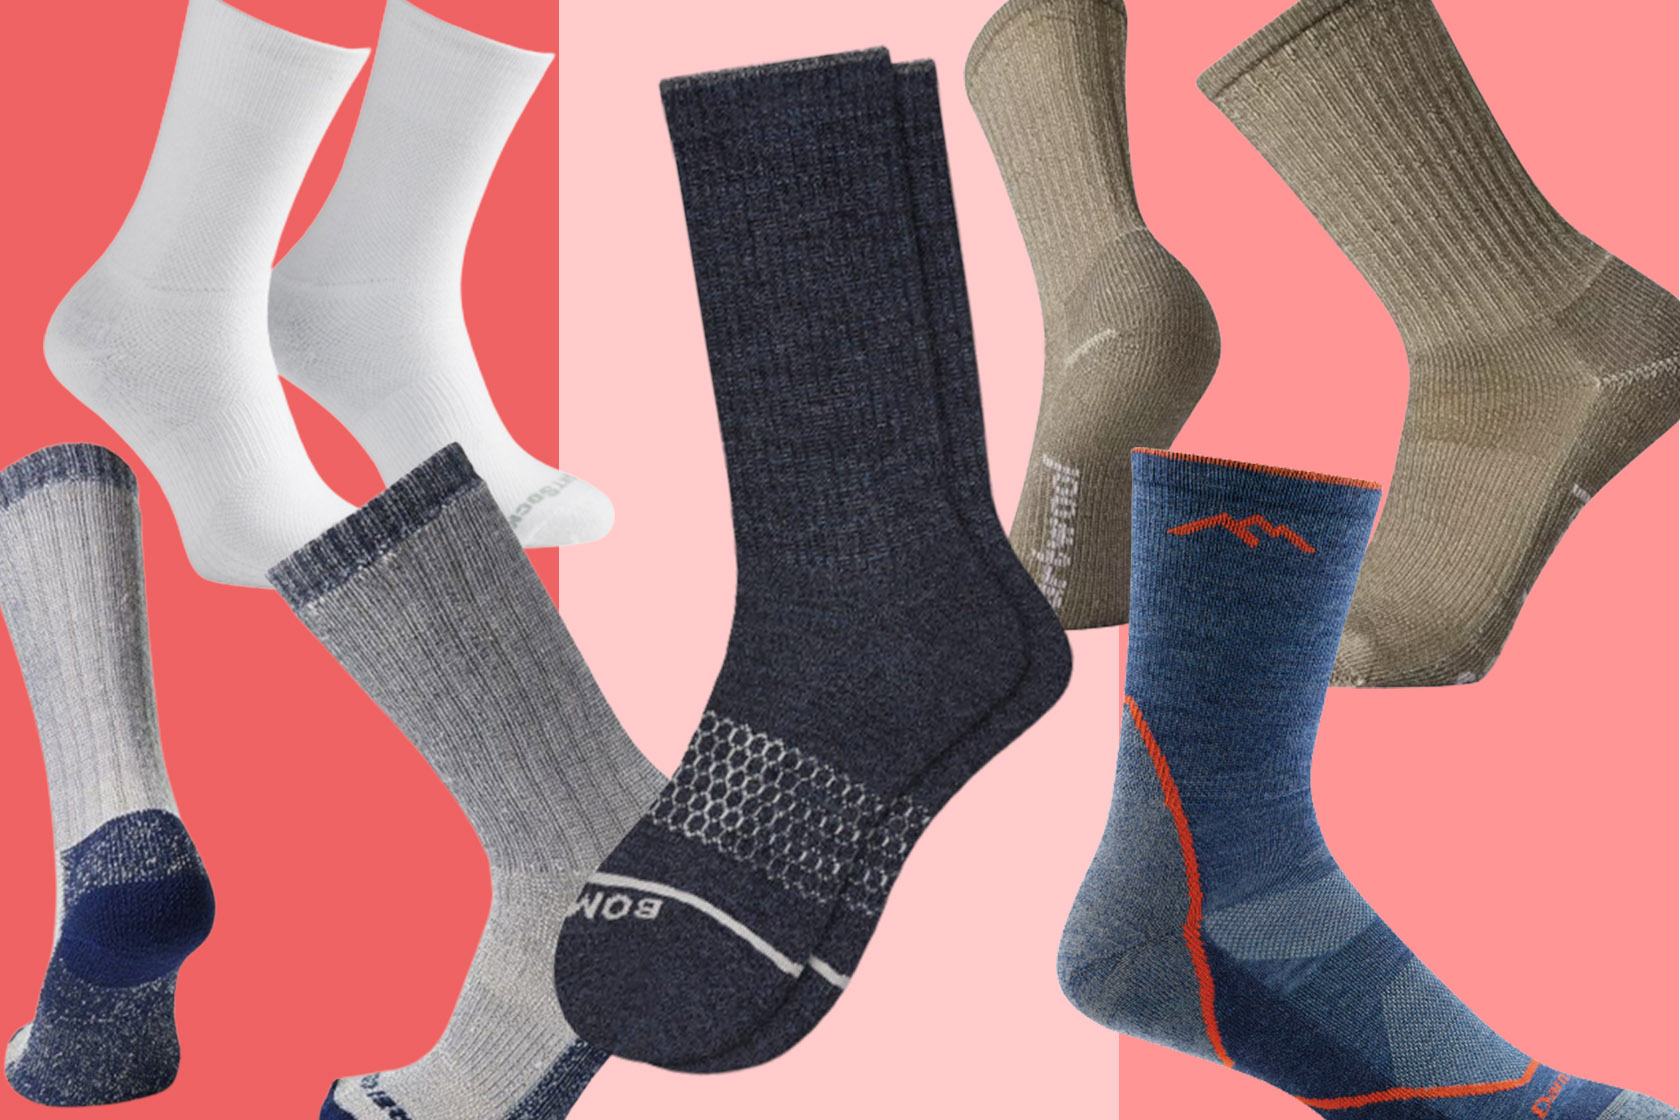 5 high performance socks under $25